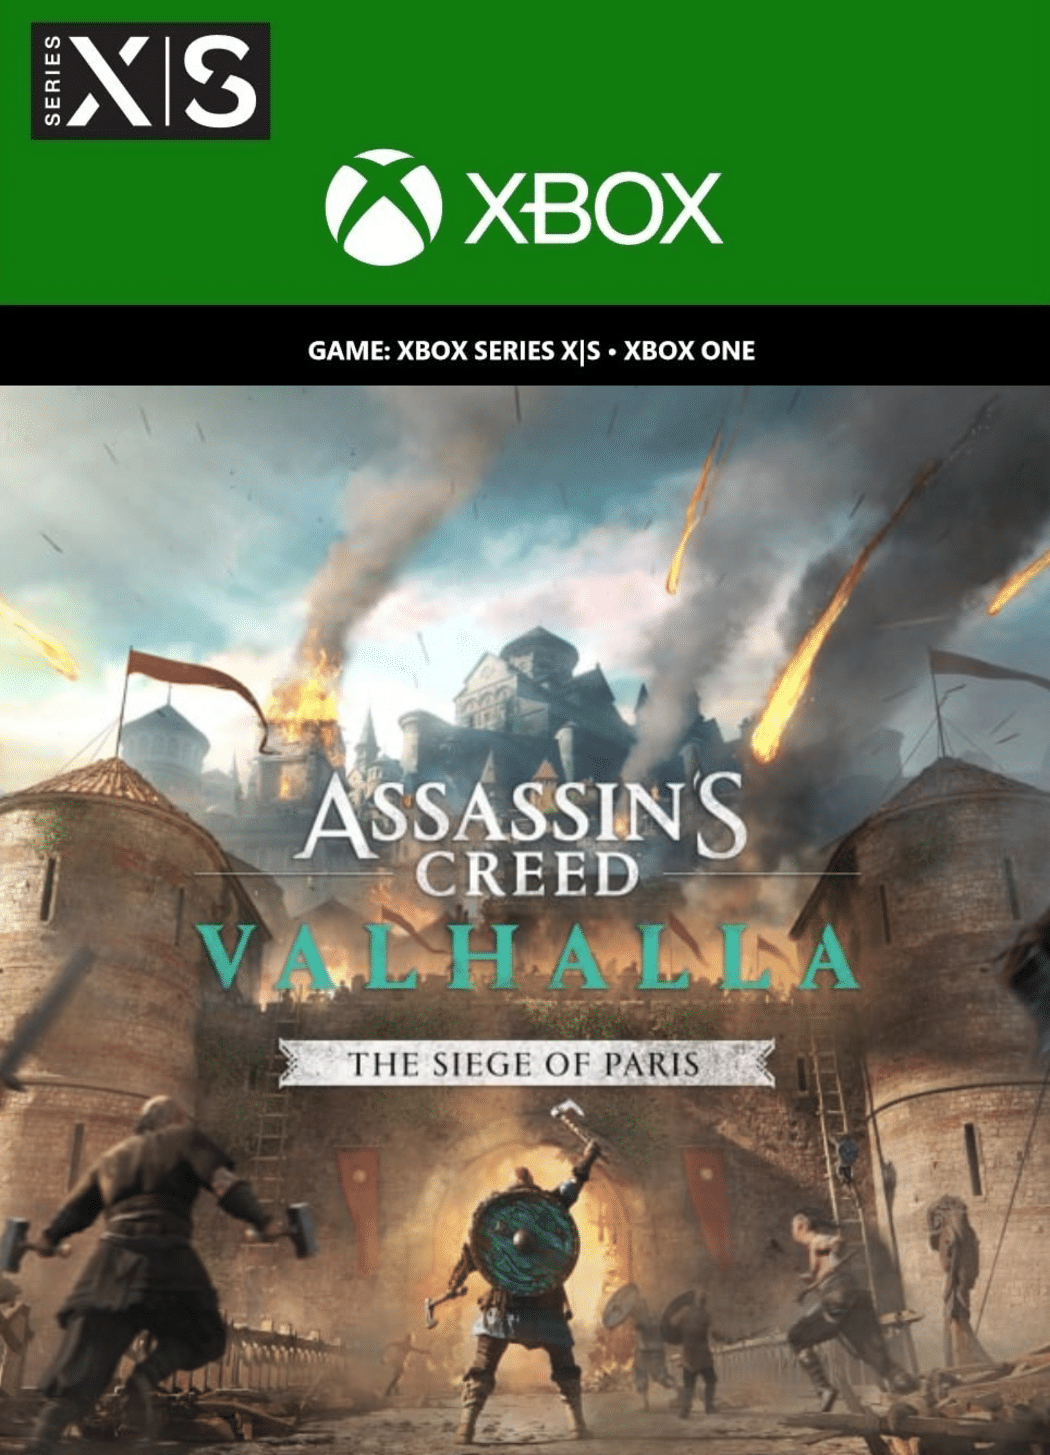 Buy Assassin's Creed Unity EUROPE Xbox One Xbox Key 